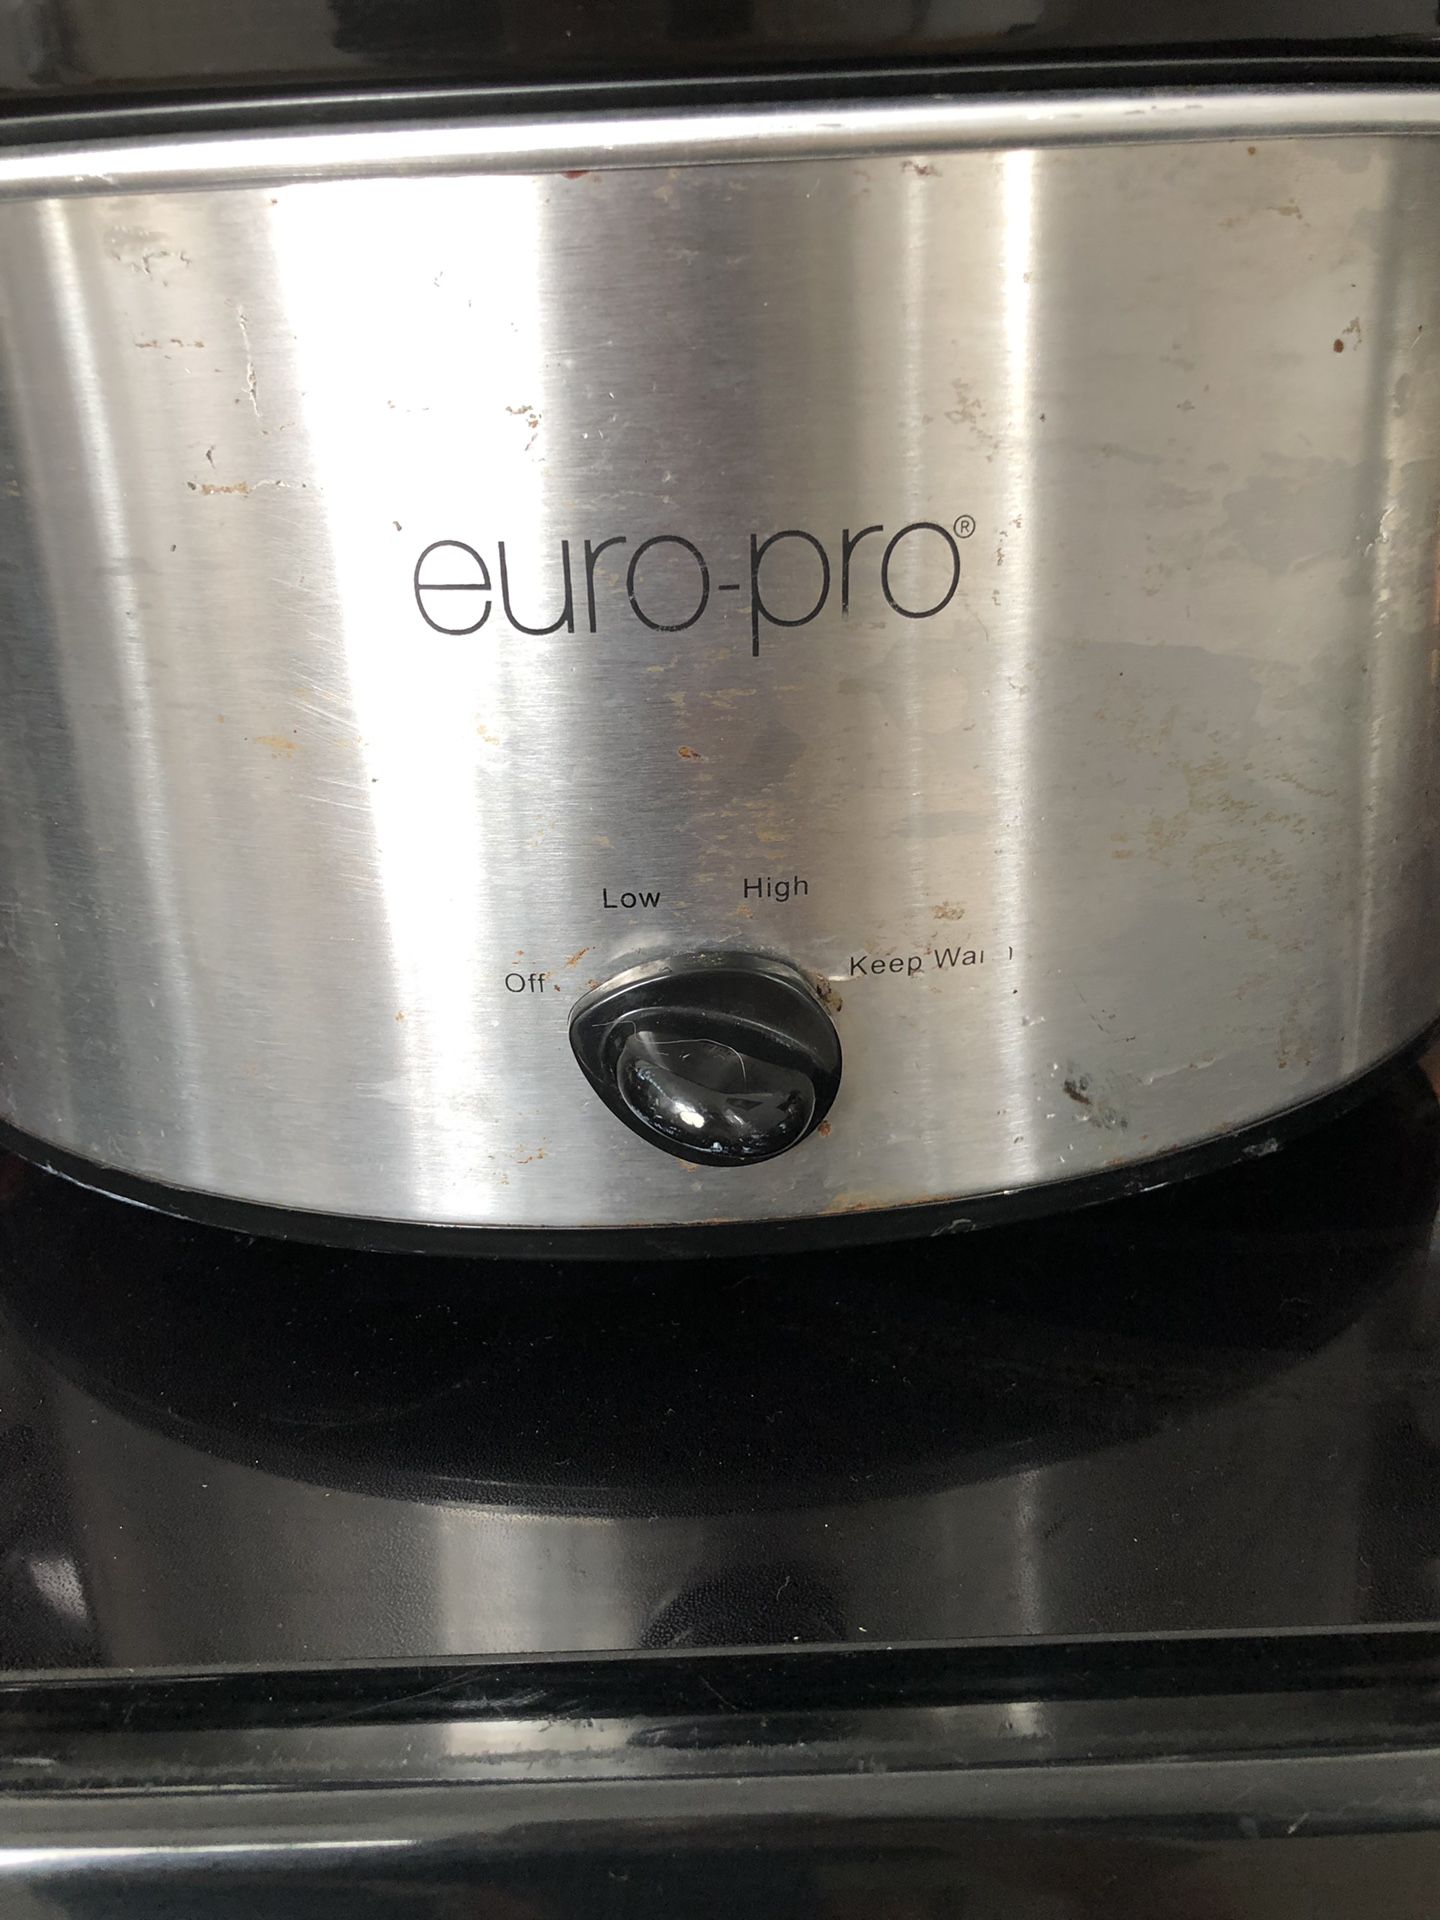 Euro pro crock pot works great!